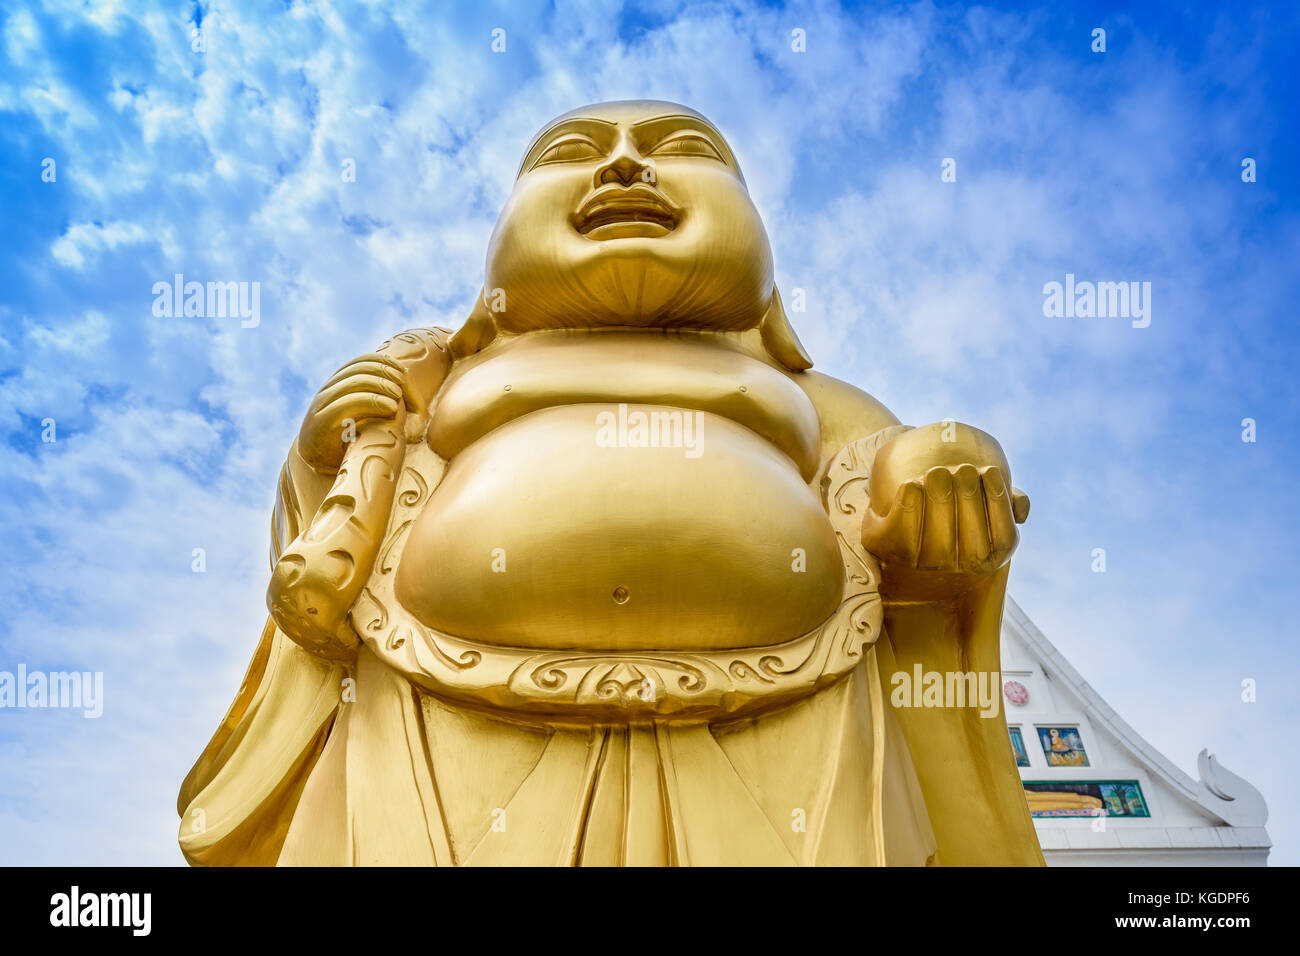 Laughing Buddha statue at a Buddhist monastery at Sarnath, Varanasi, India. Stock Photo